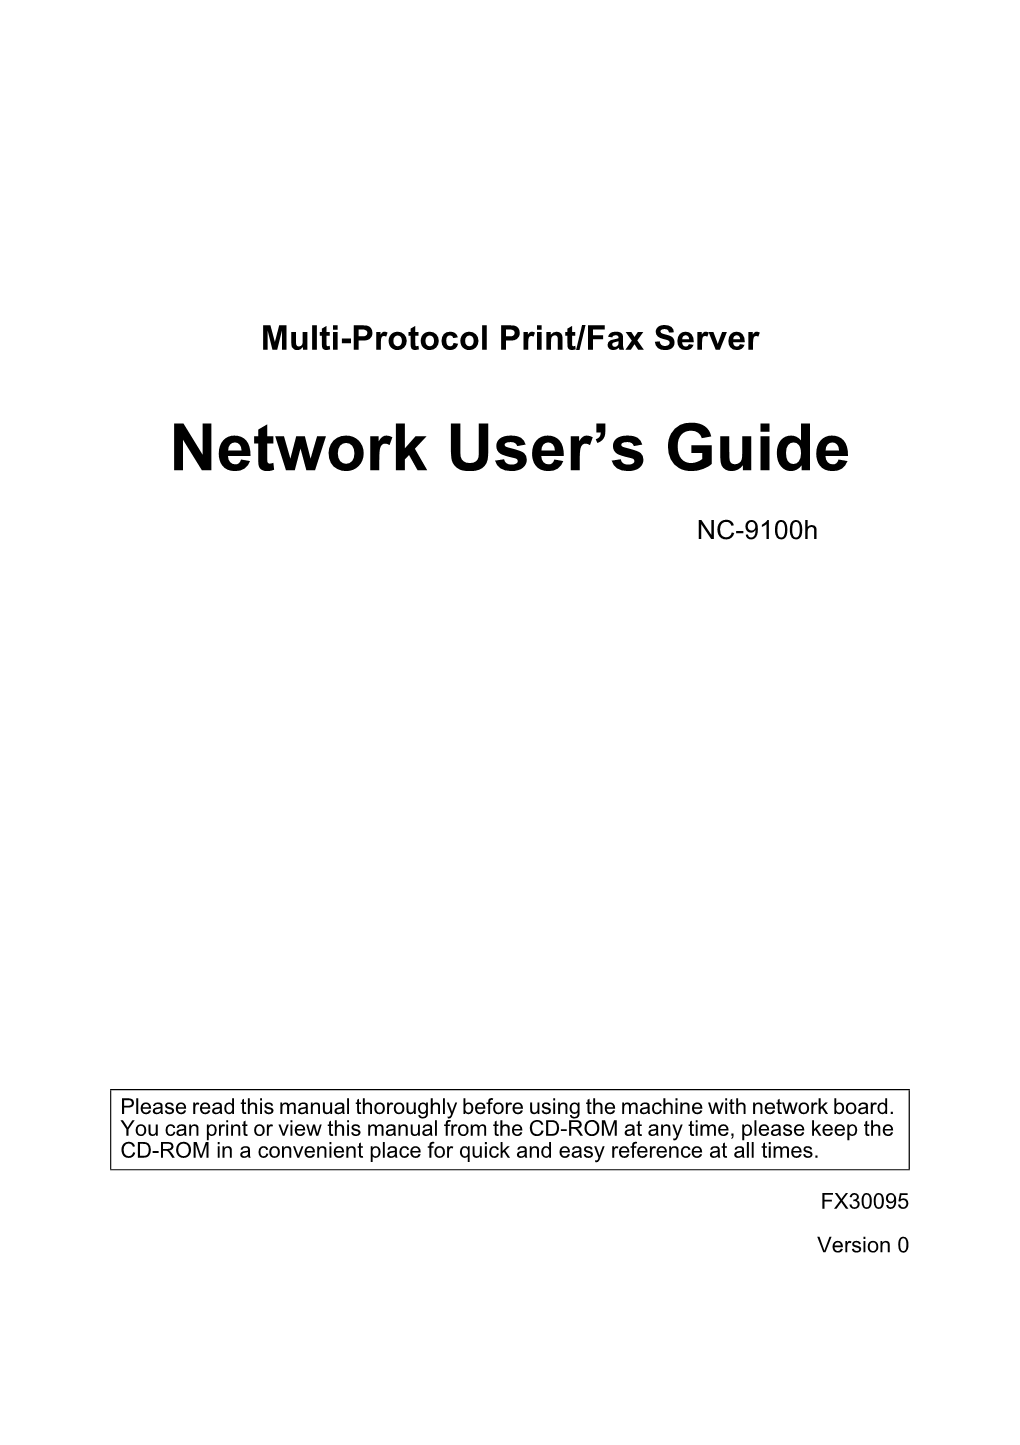 Network User's Guide